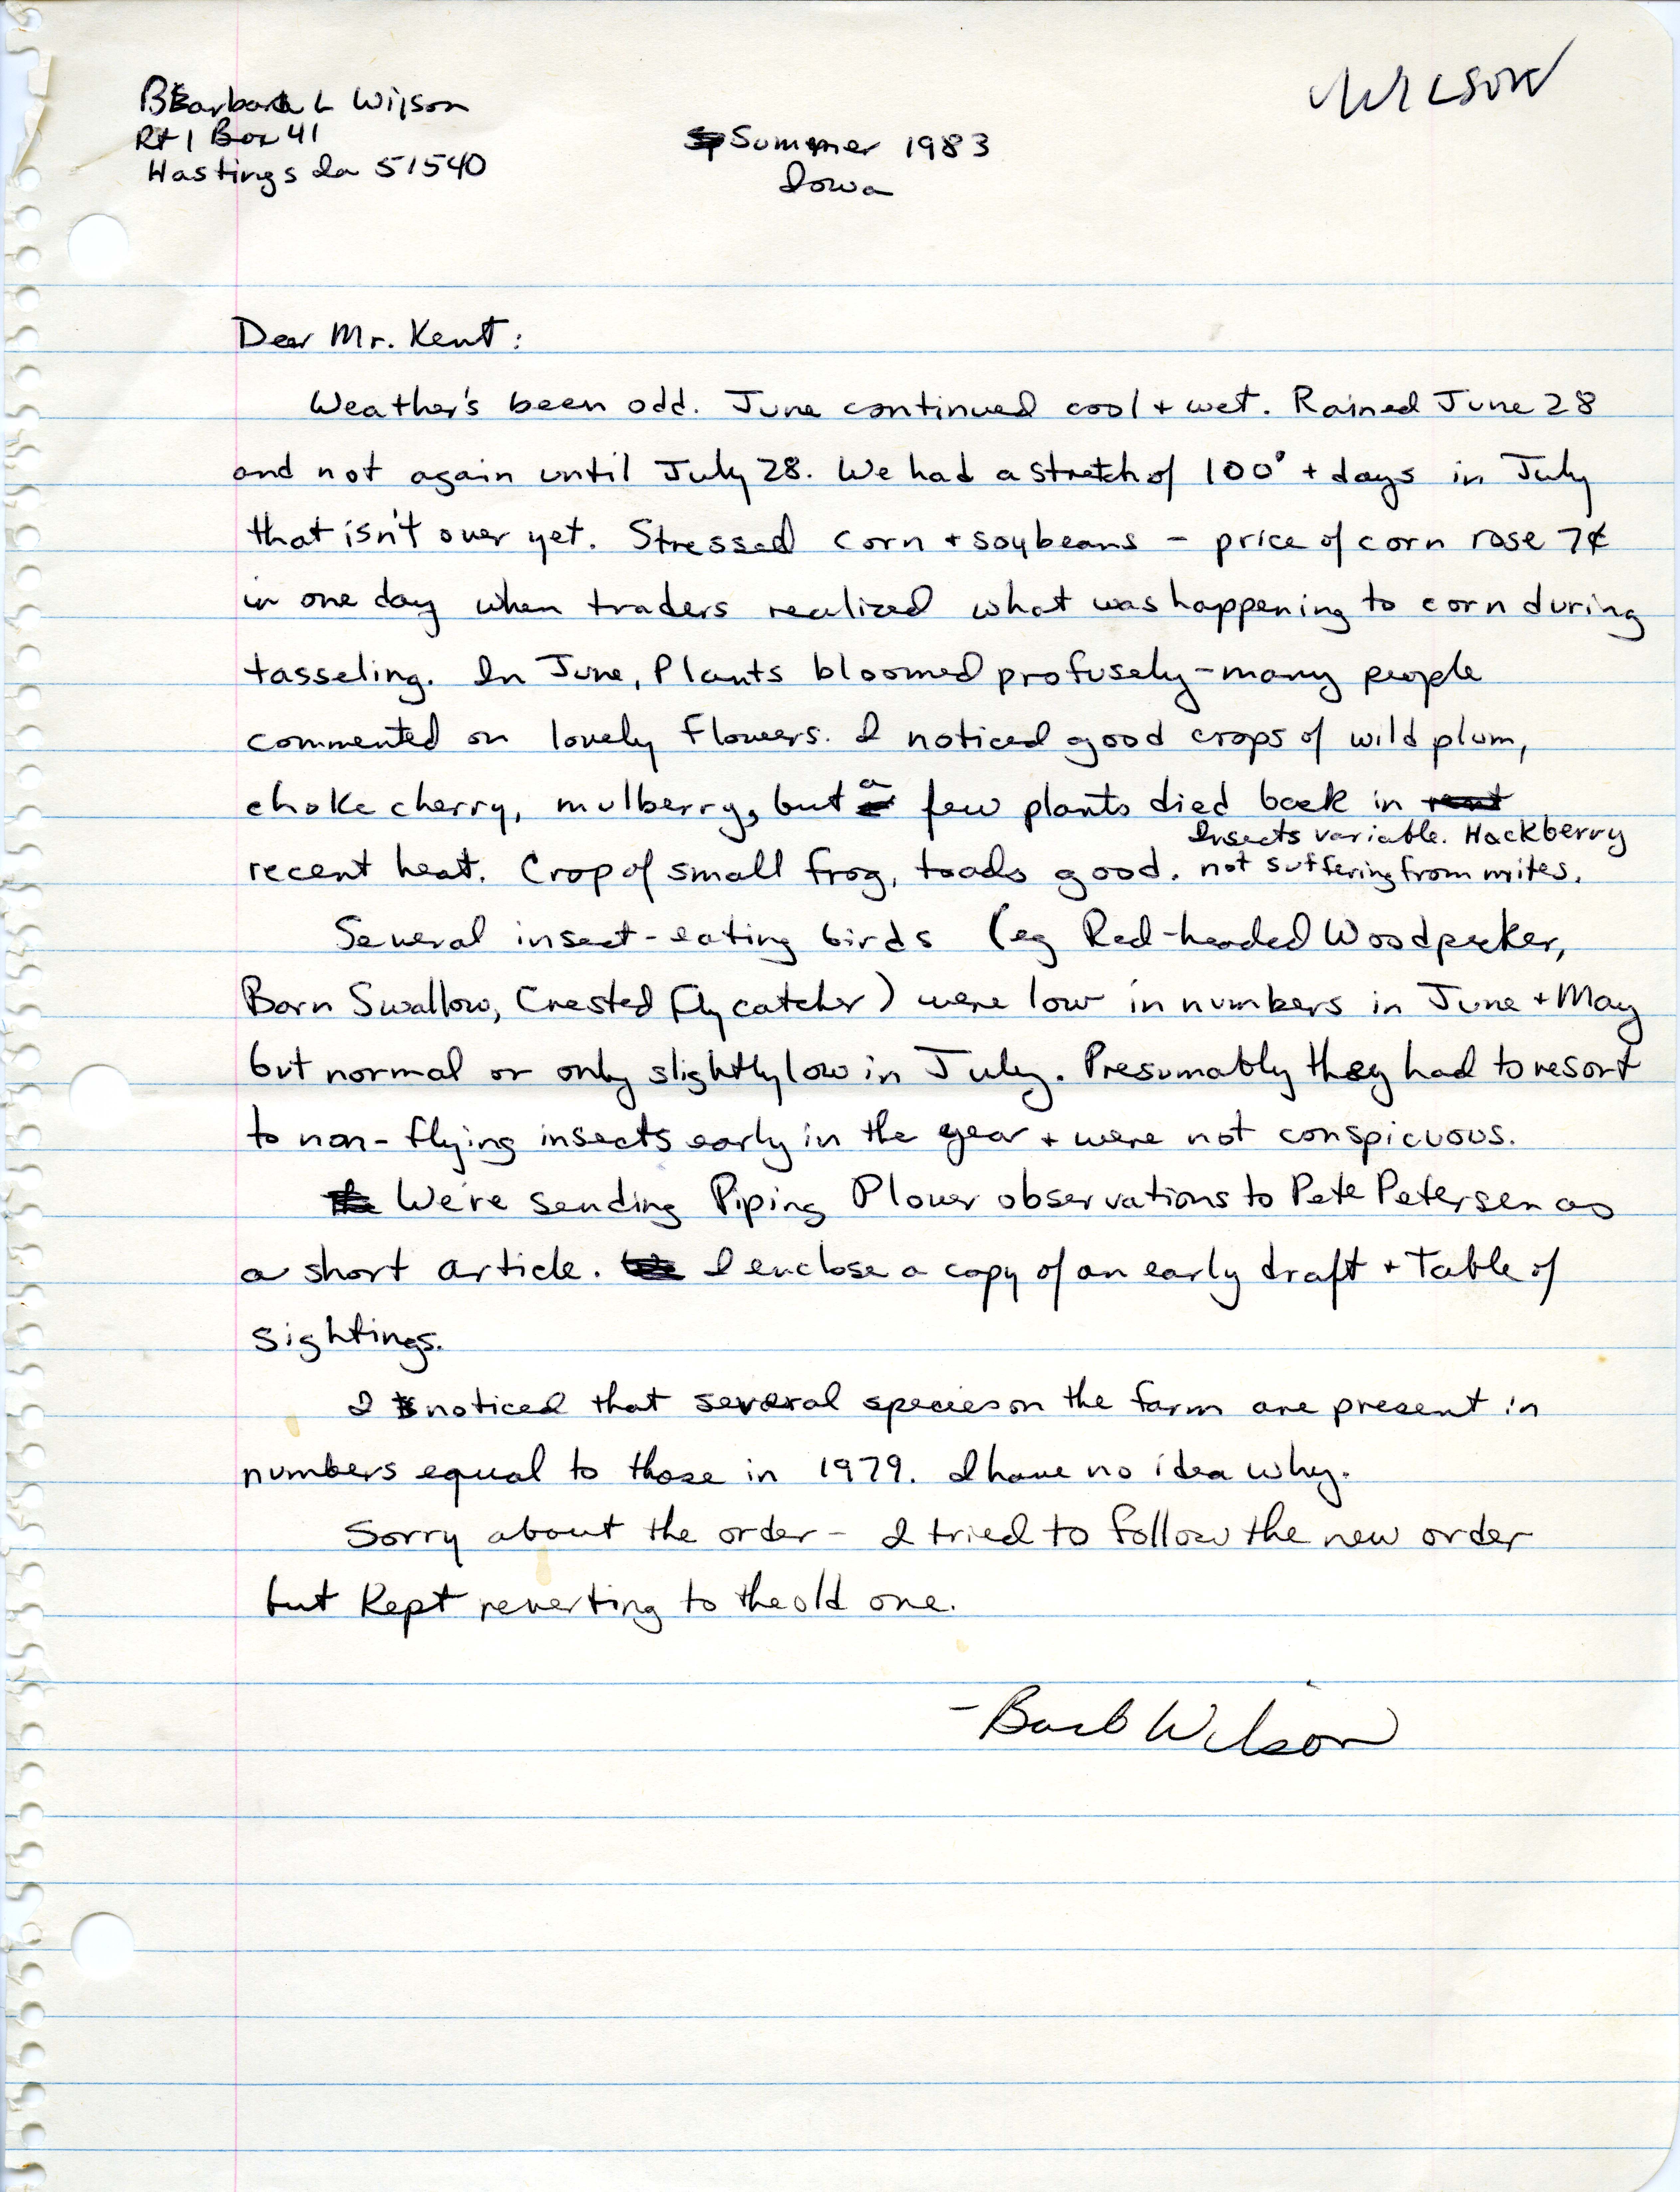 Barb Wilson letter to Thomas Kent regarding bird sightings, Summer 1983